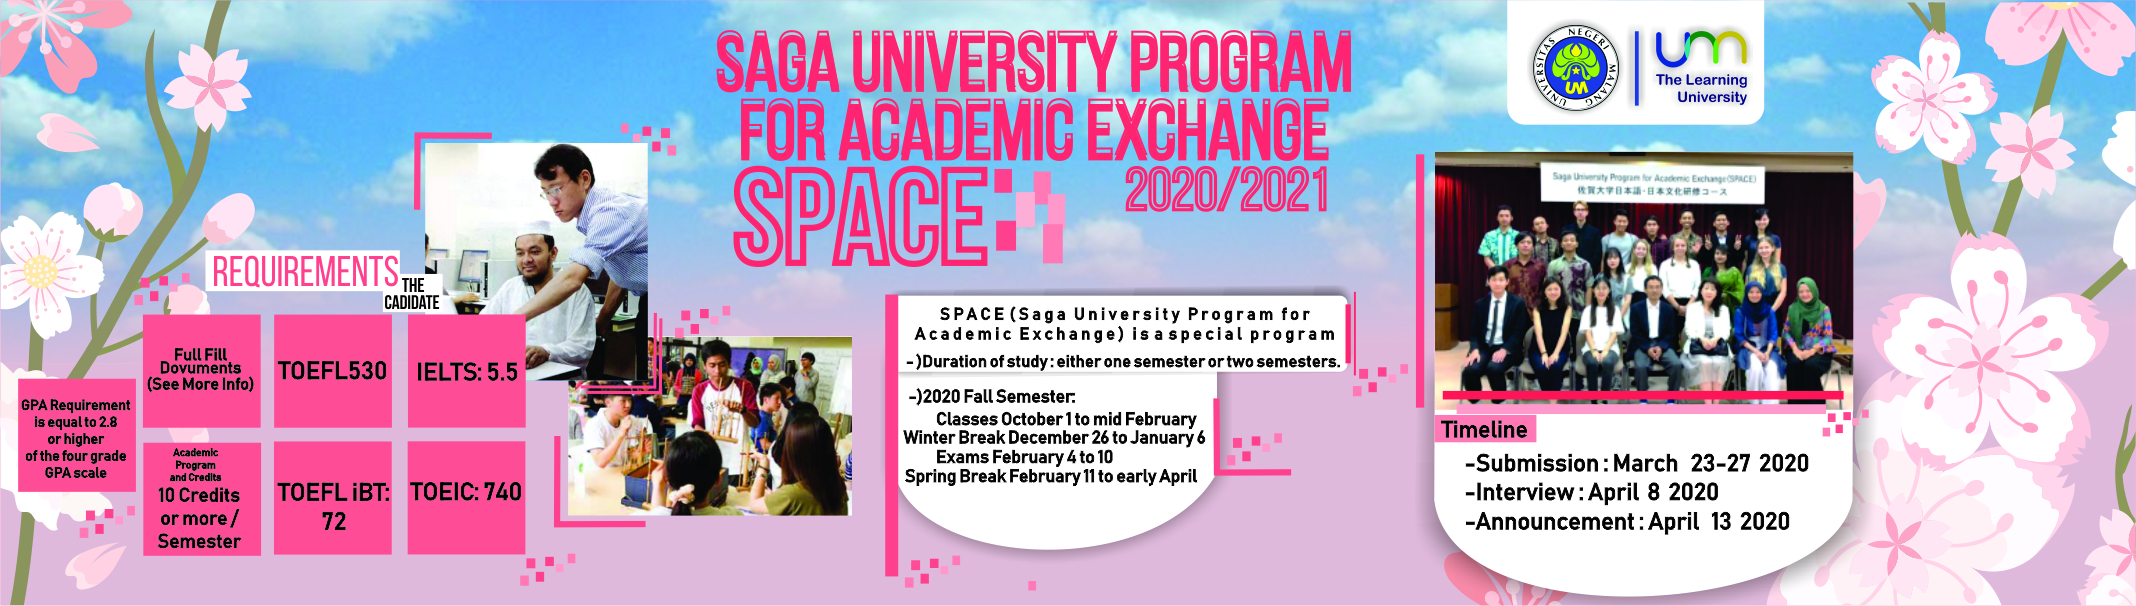 Saga University Program for Academic Exchange 2020-2021 (Space-E) Opportunities